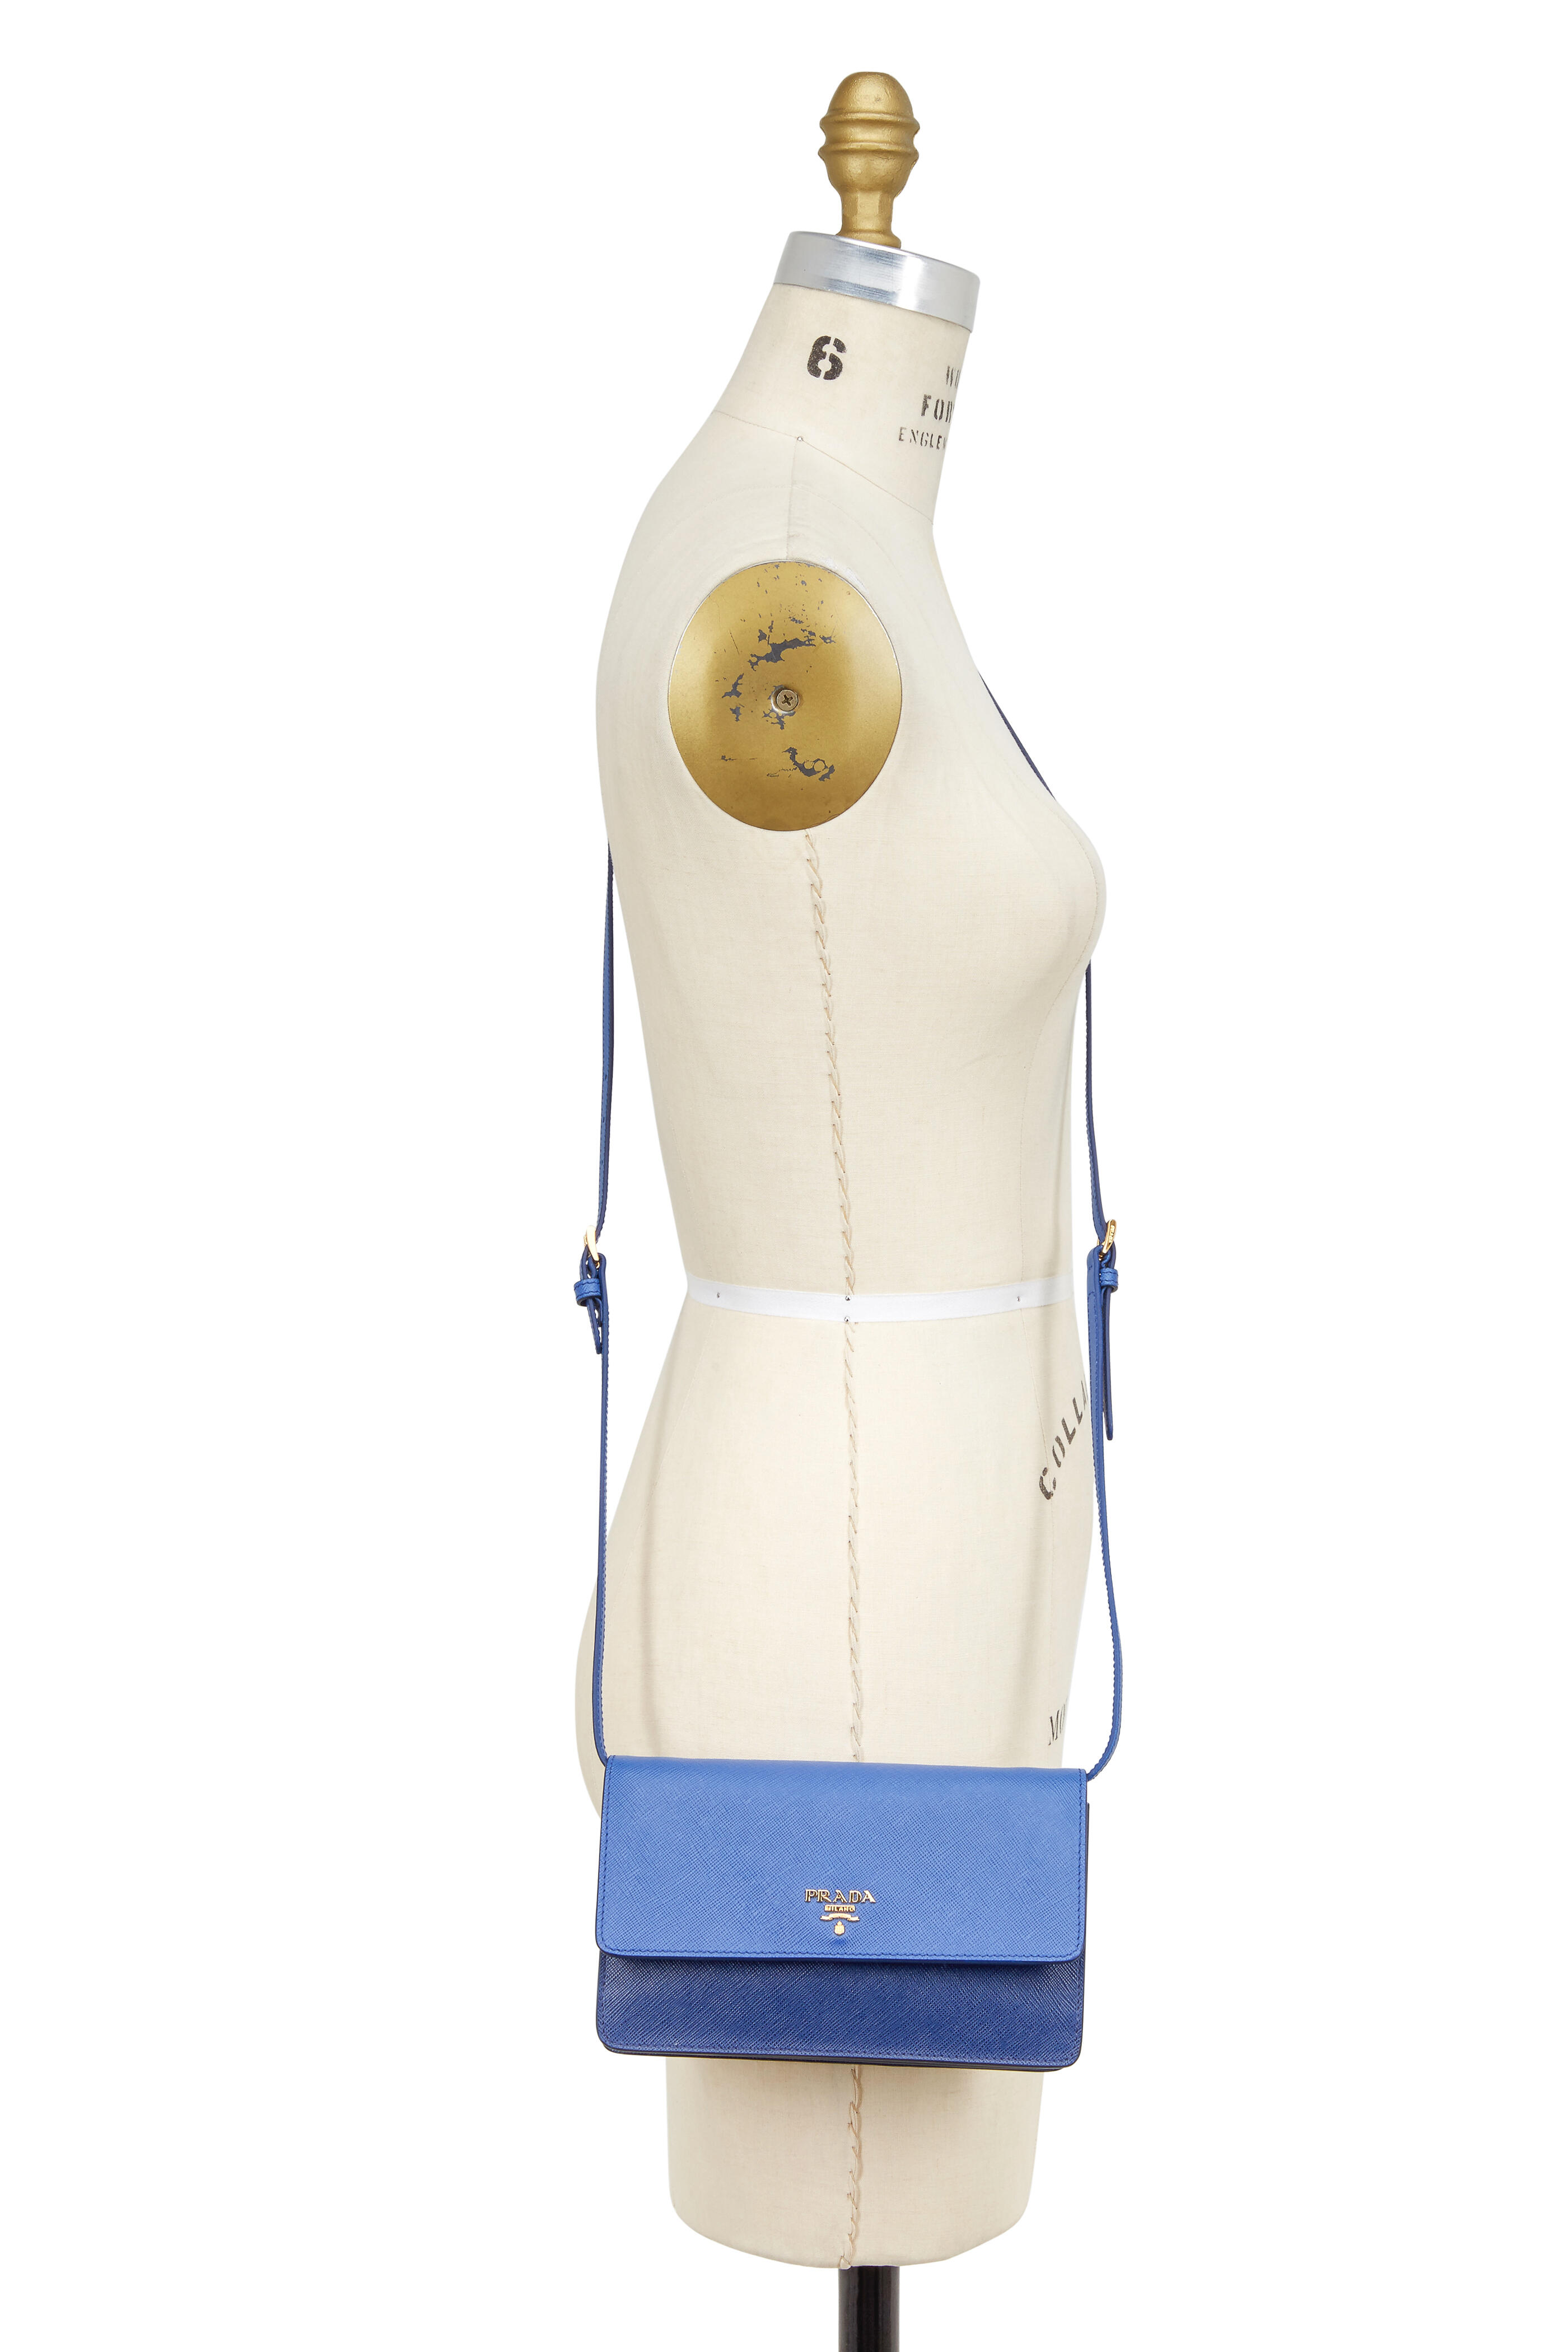 PRADA: Monochrome bag in saffiano leather - Blush Pink  Prada crossbody  bags 1BD127 2ERX online at